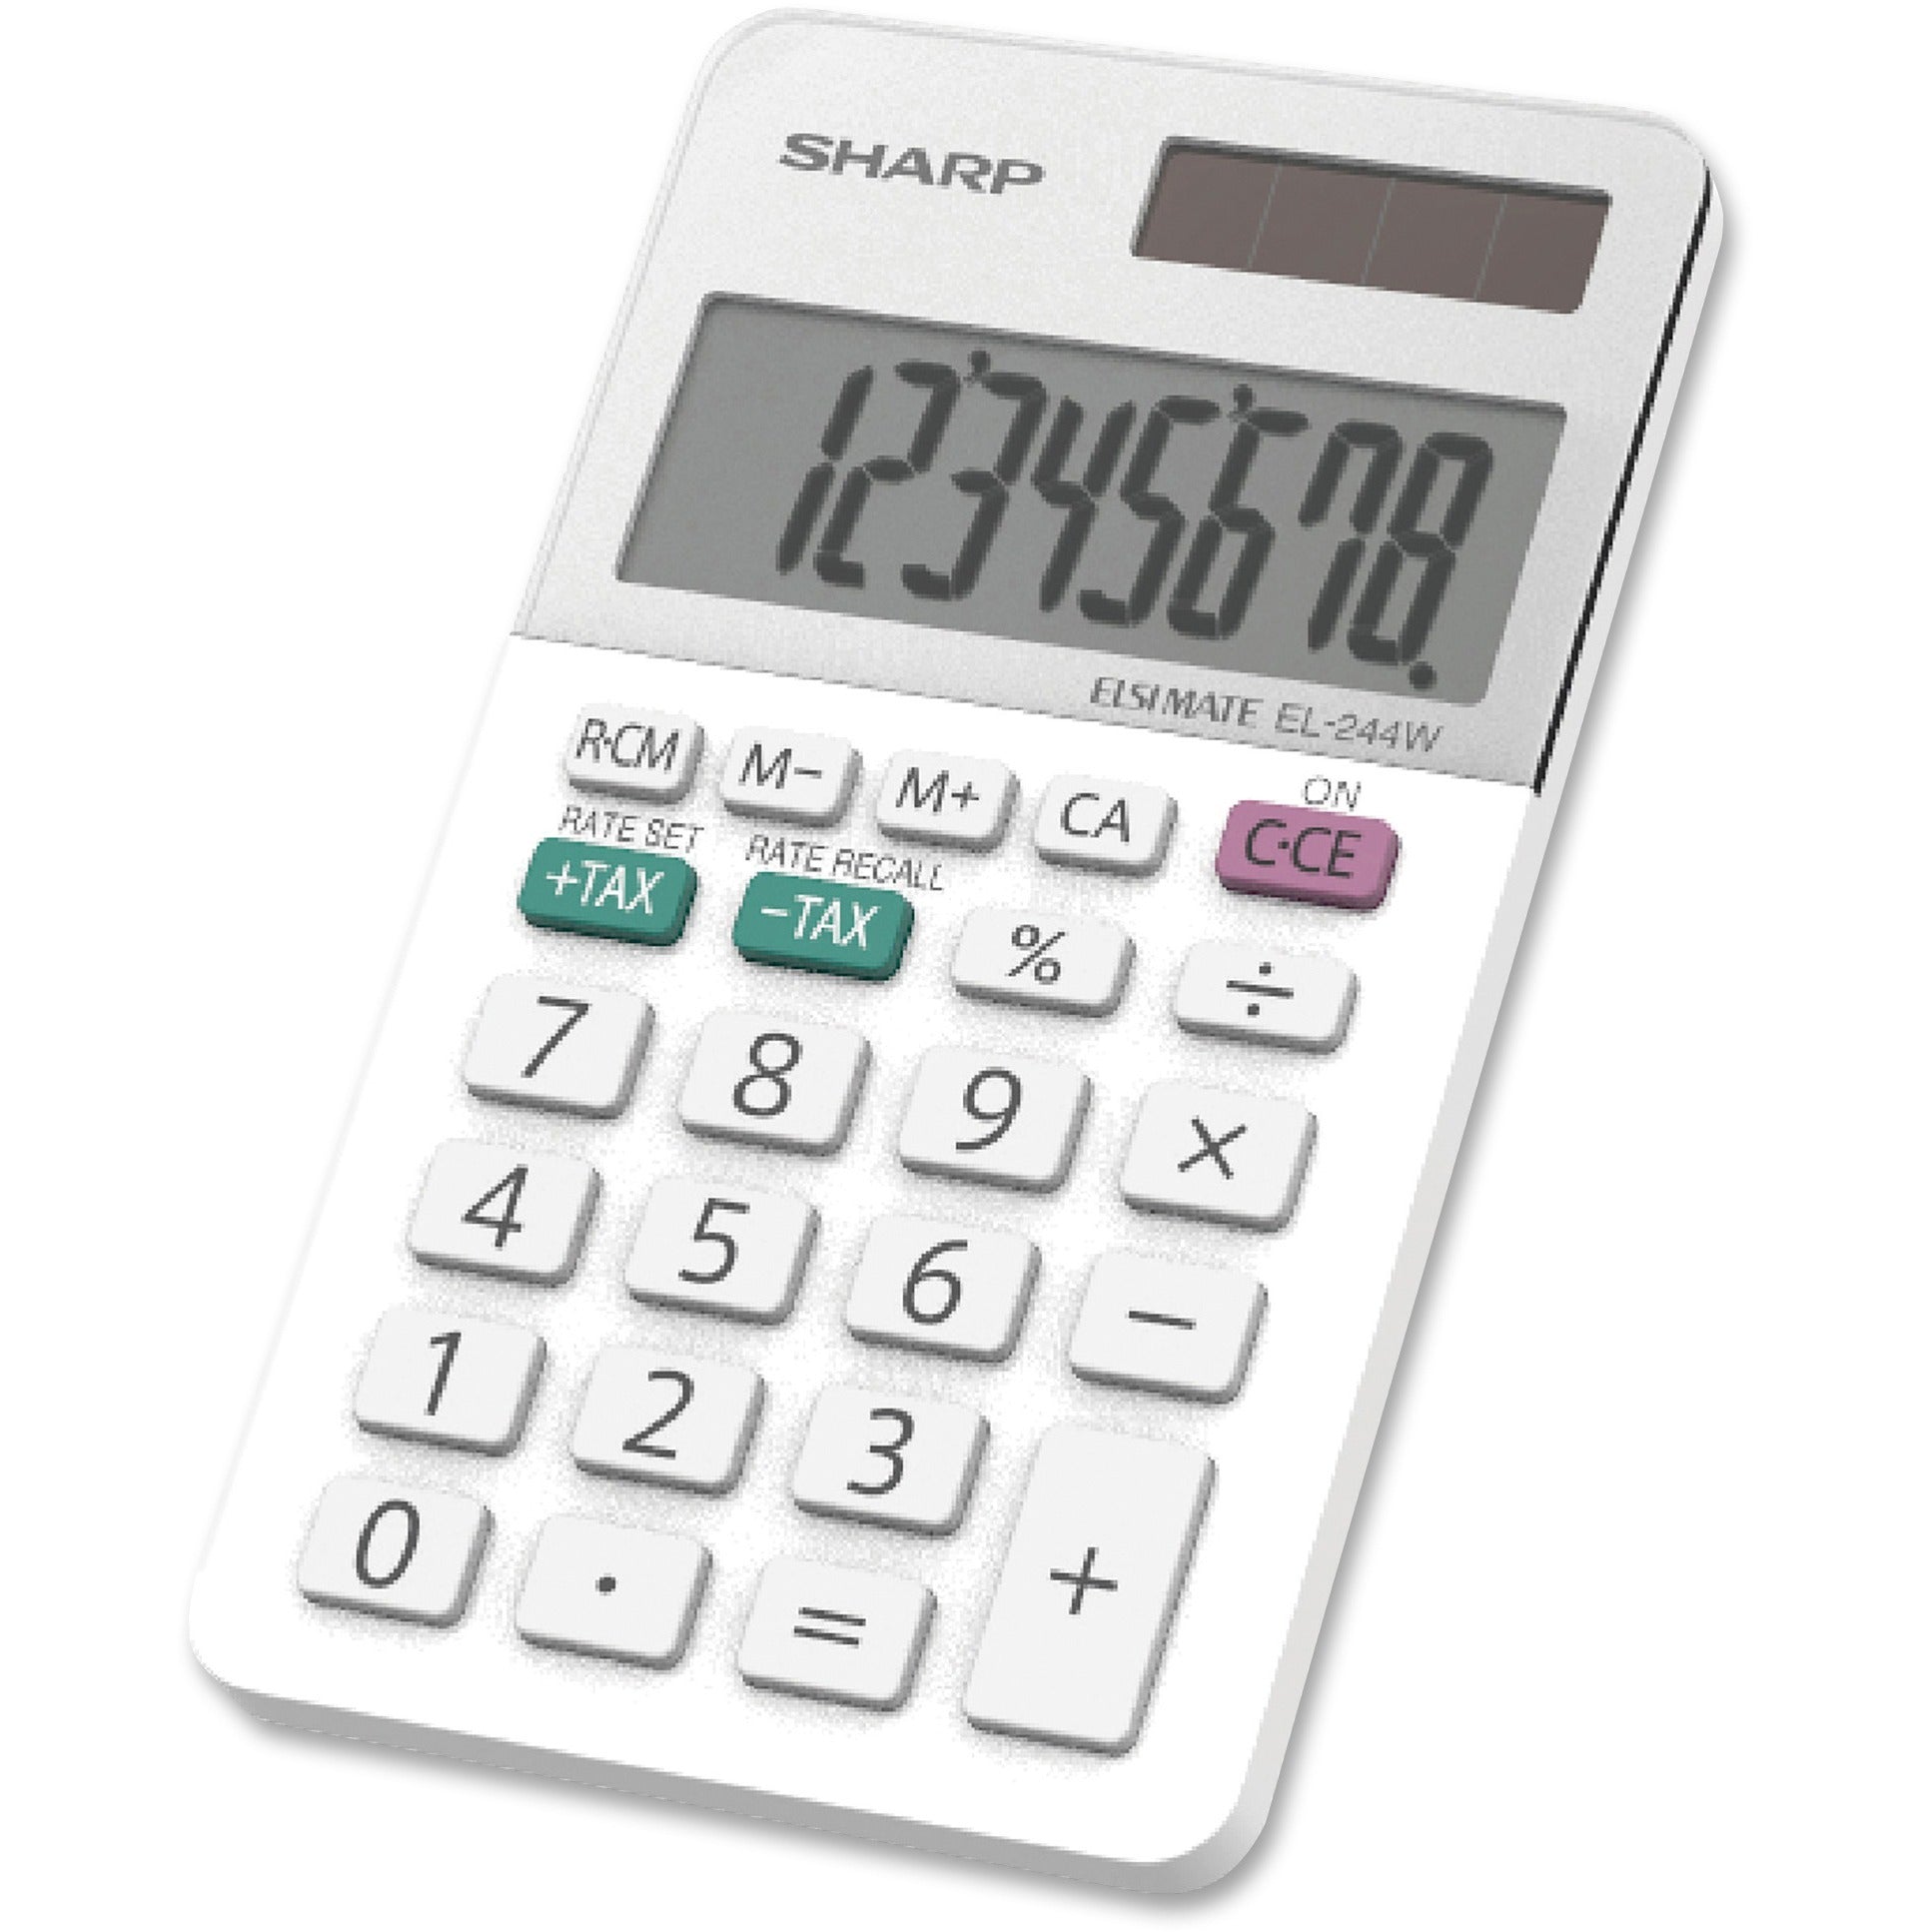 sharp-el-244wb-8-digit-professional-pocket-calculator-extra-large-display-durable-plastic-key-dual-power-3-key-memory-automatic-power-down-8-digits-lcd-white-1-each_shrel244wb - 2